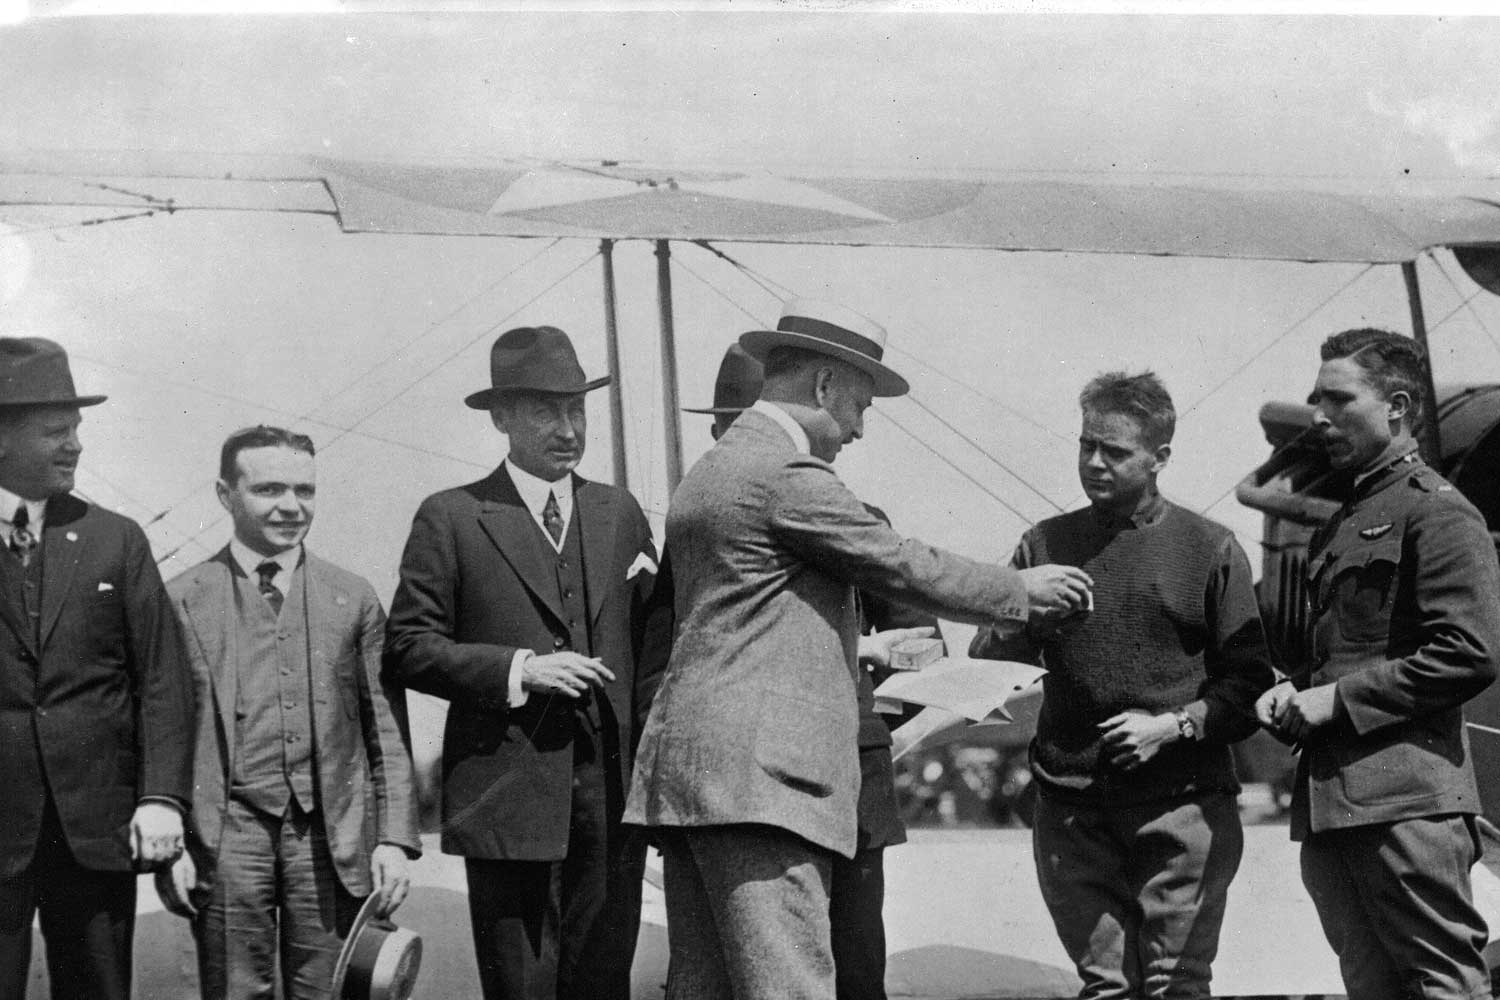 Pilots receiving Hamilton watches in 1918